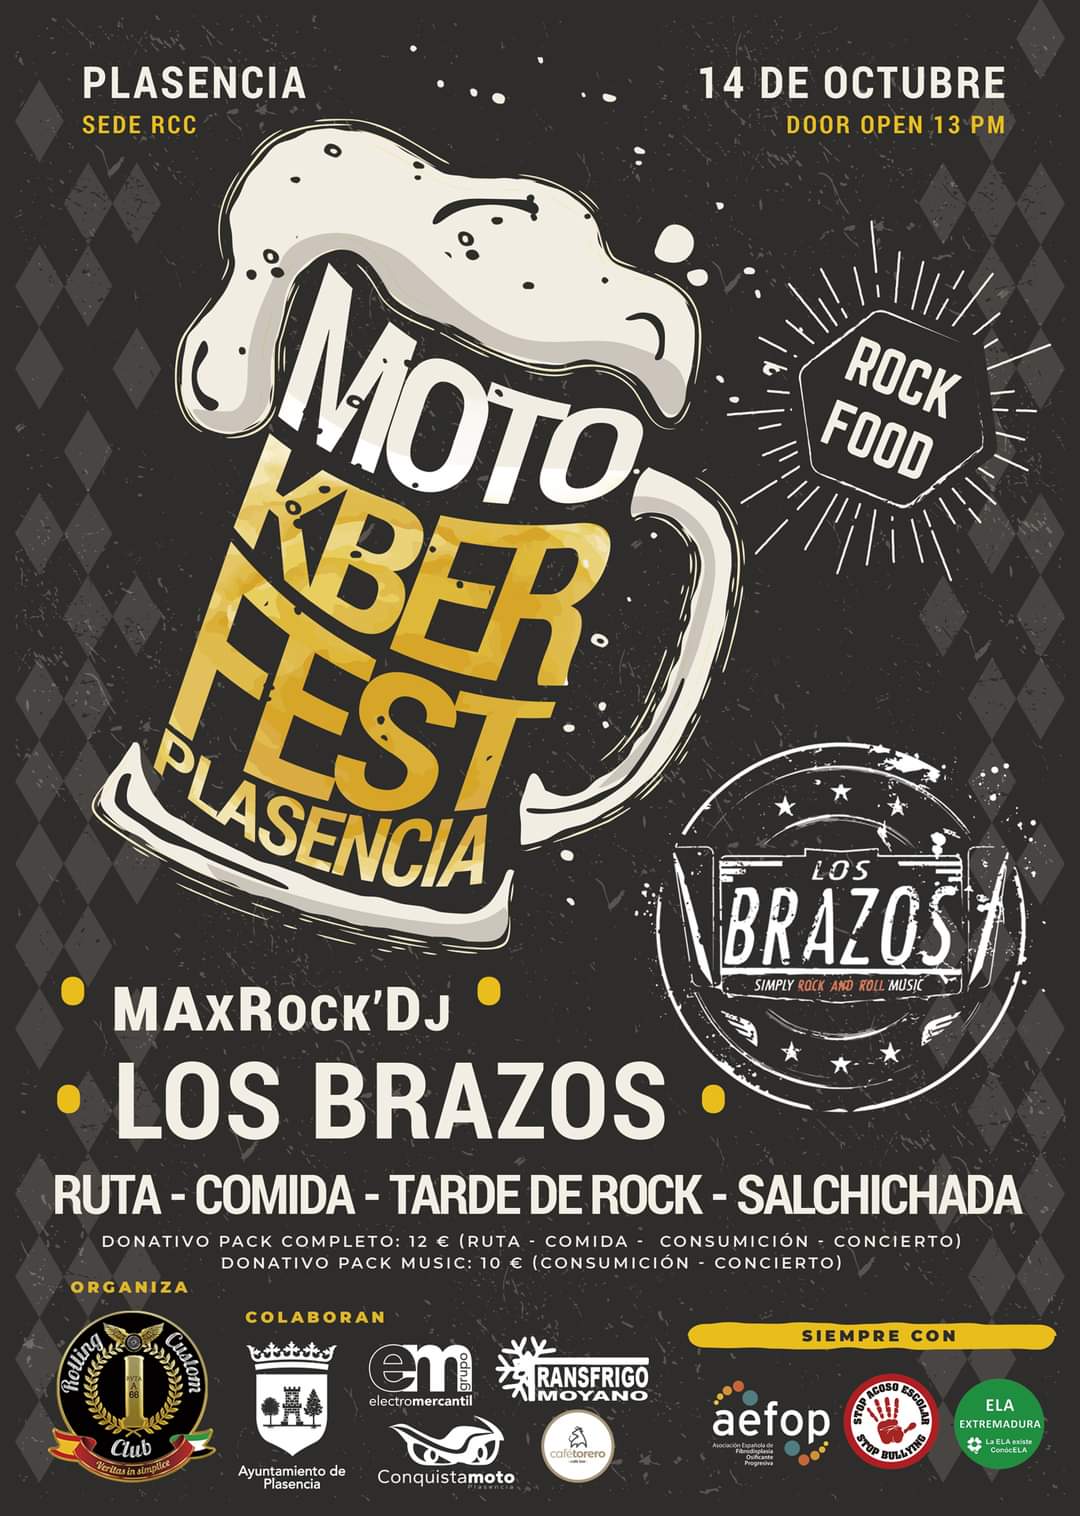 Motokbeer Fest. Plasencia, Cáceres | Los Brazos